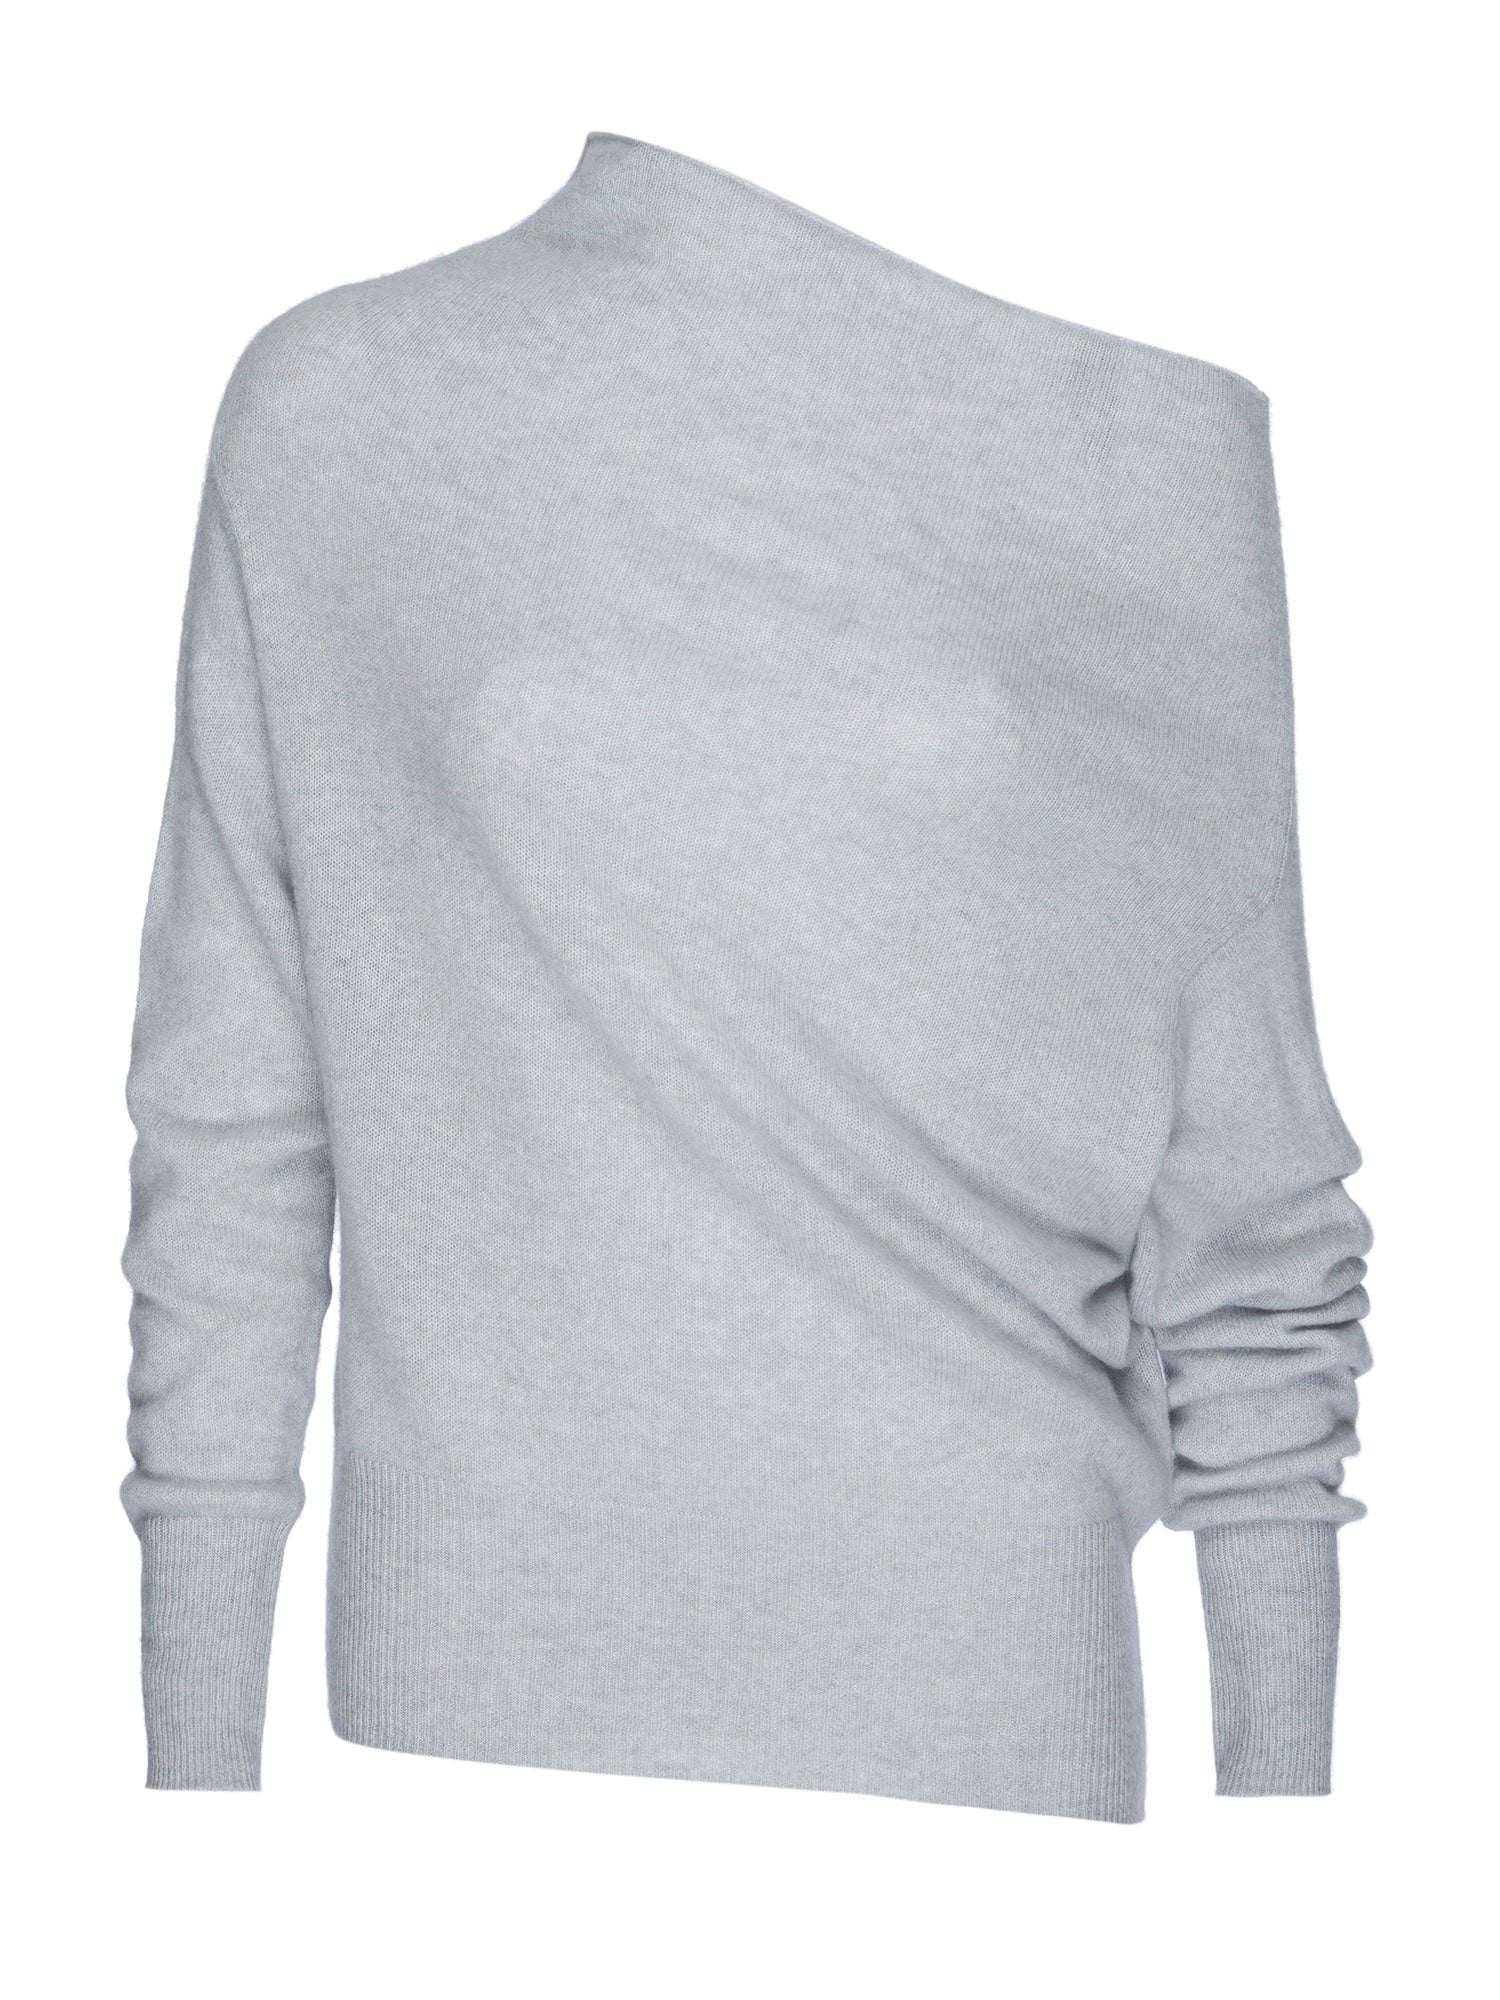 Lori cashmere off shoulder light blue sweater flat view